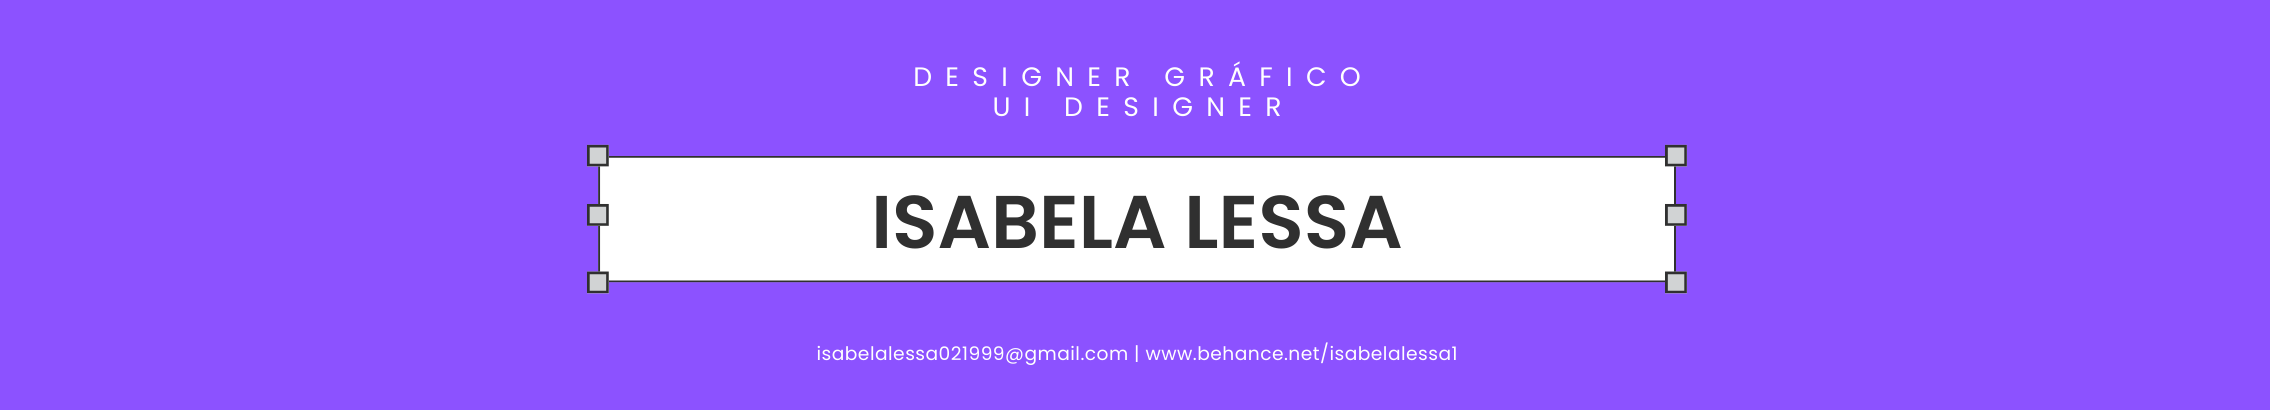 Isabela Lessa's profile banner